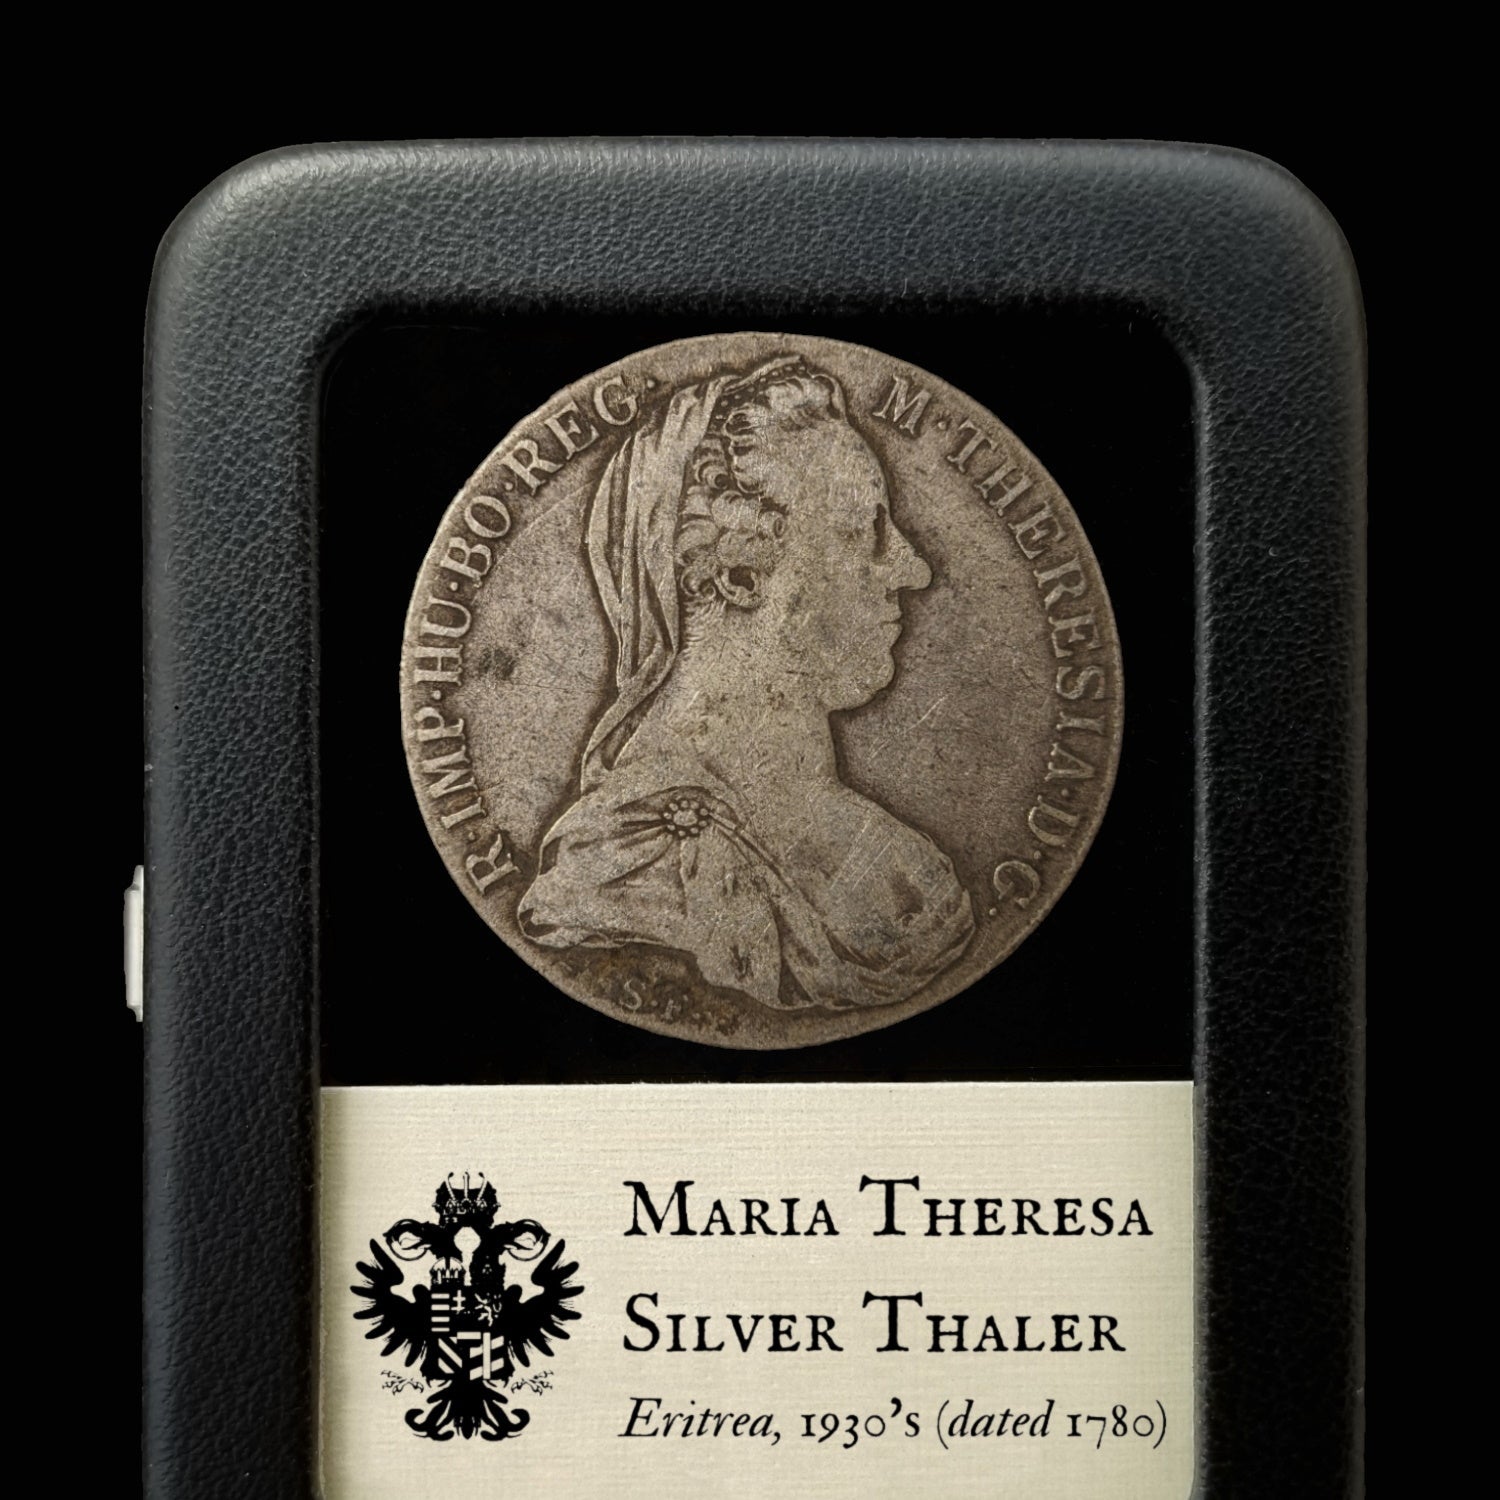 Maria Theresa Silver Thaler - 1930's, dated 1780 - Italian Eritrea